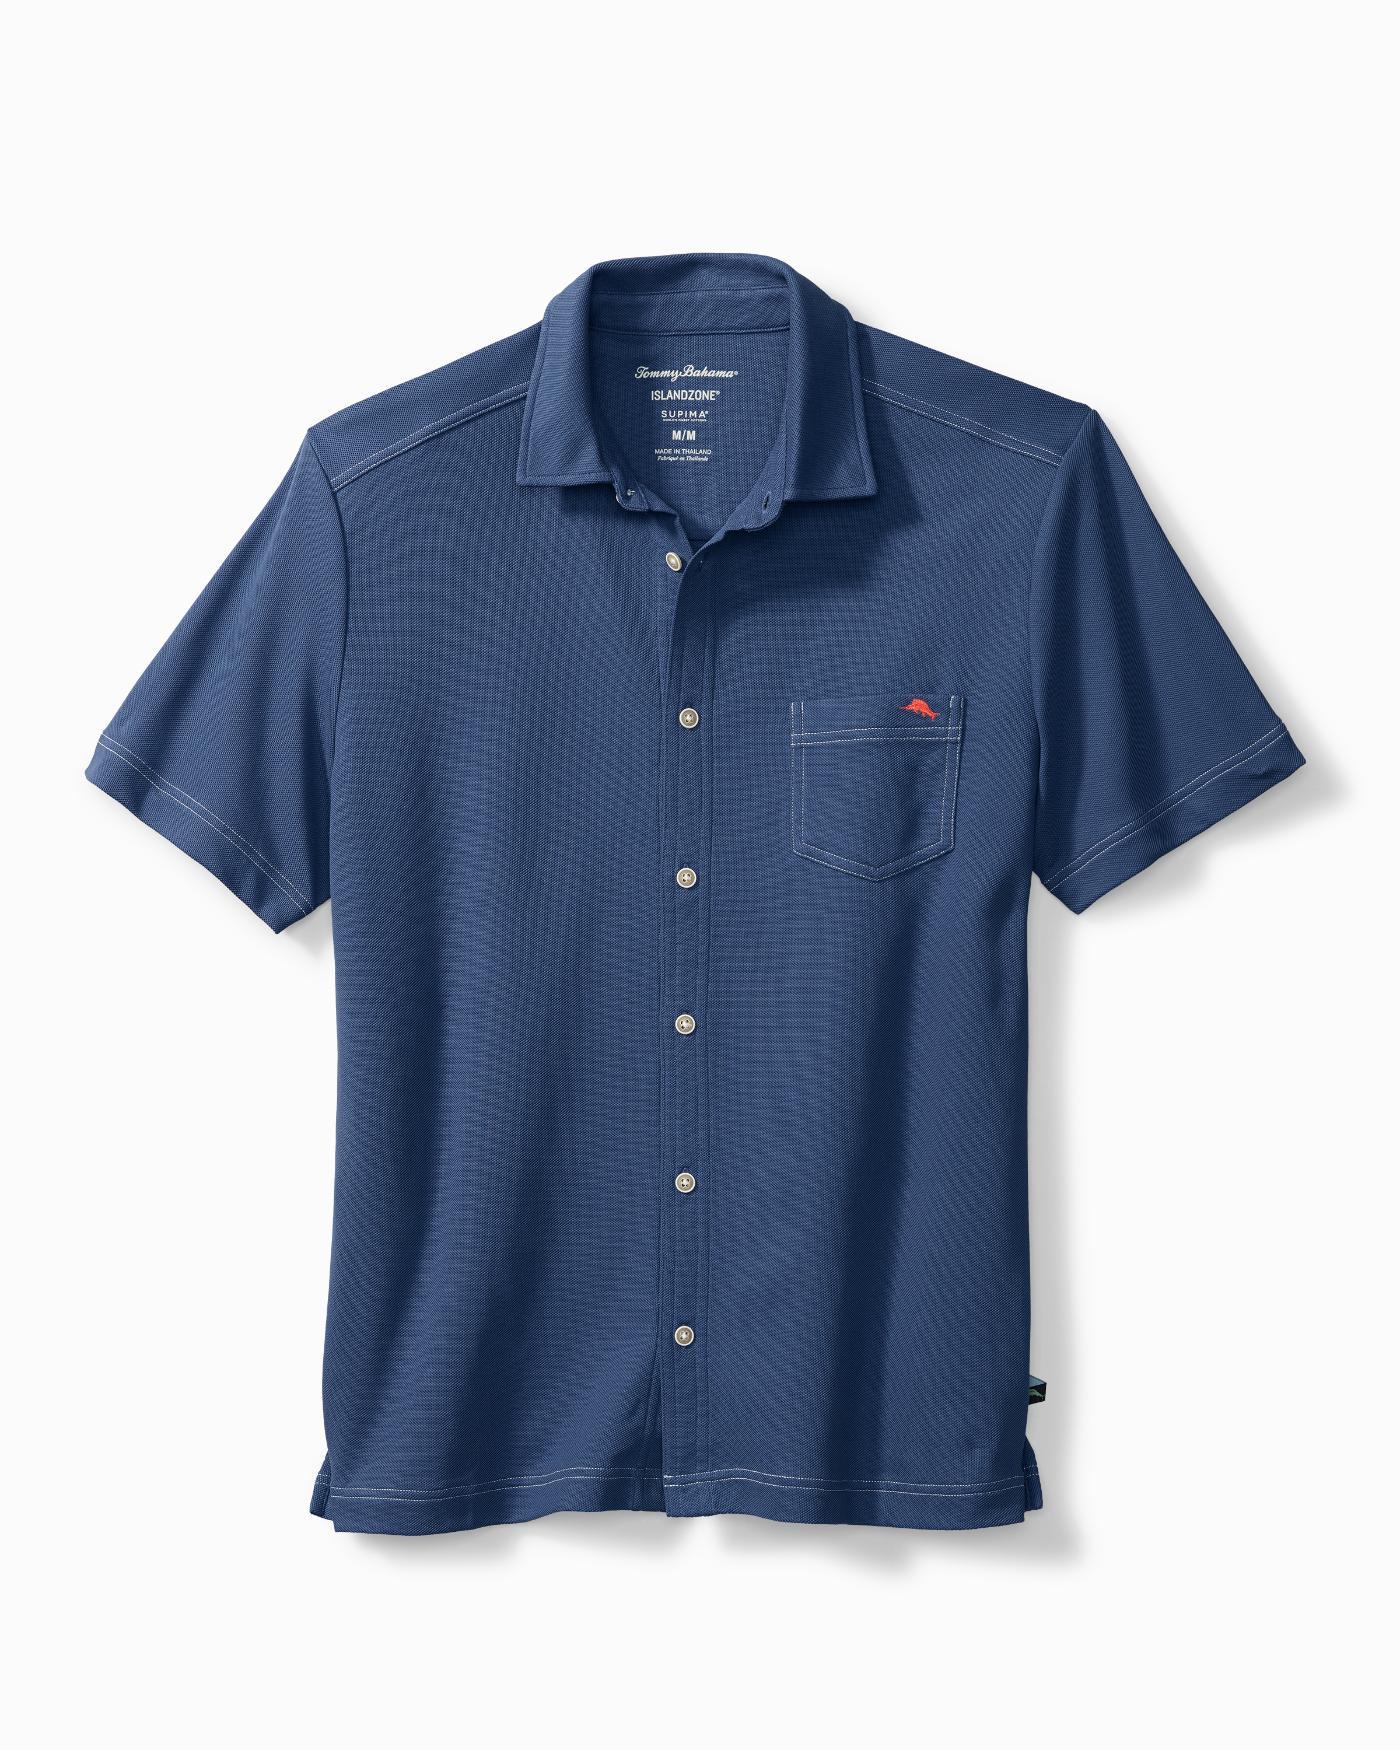 Tommy Bahama Cotton Emfielder Knit Camp Shirt in Blue for Men - Lyst